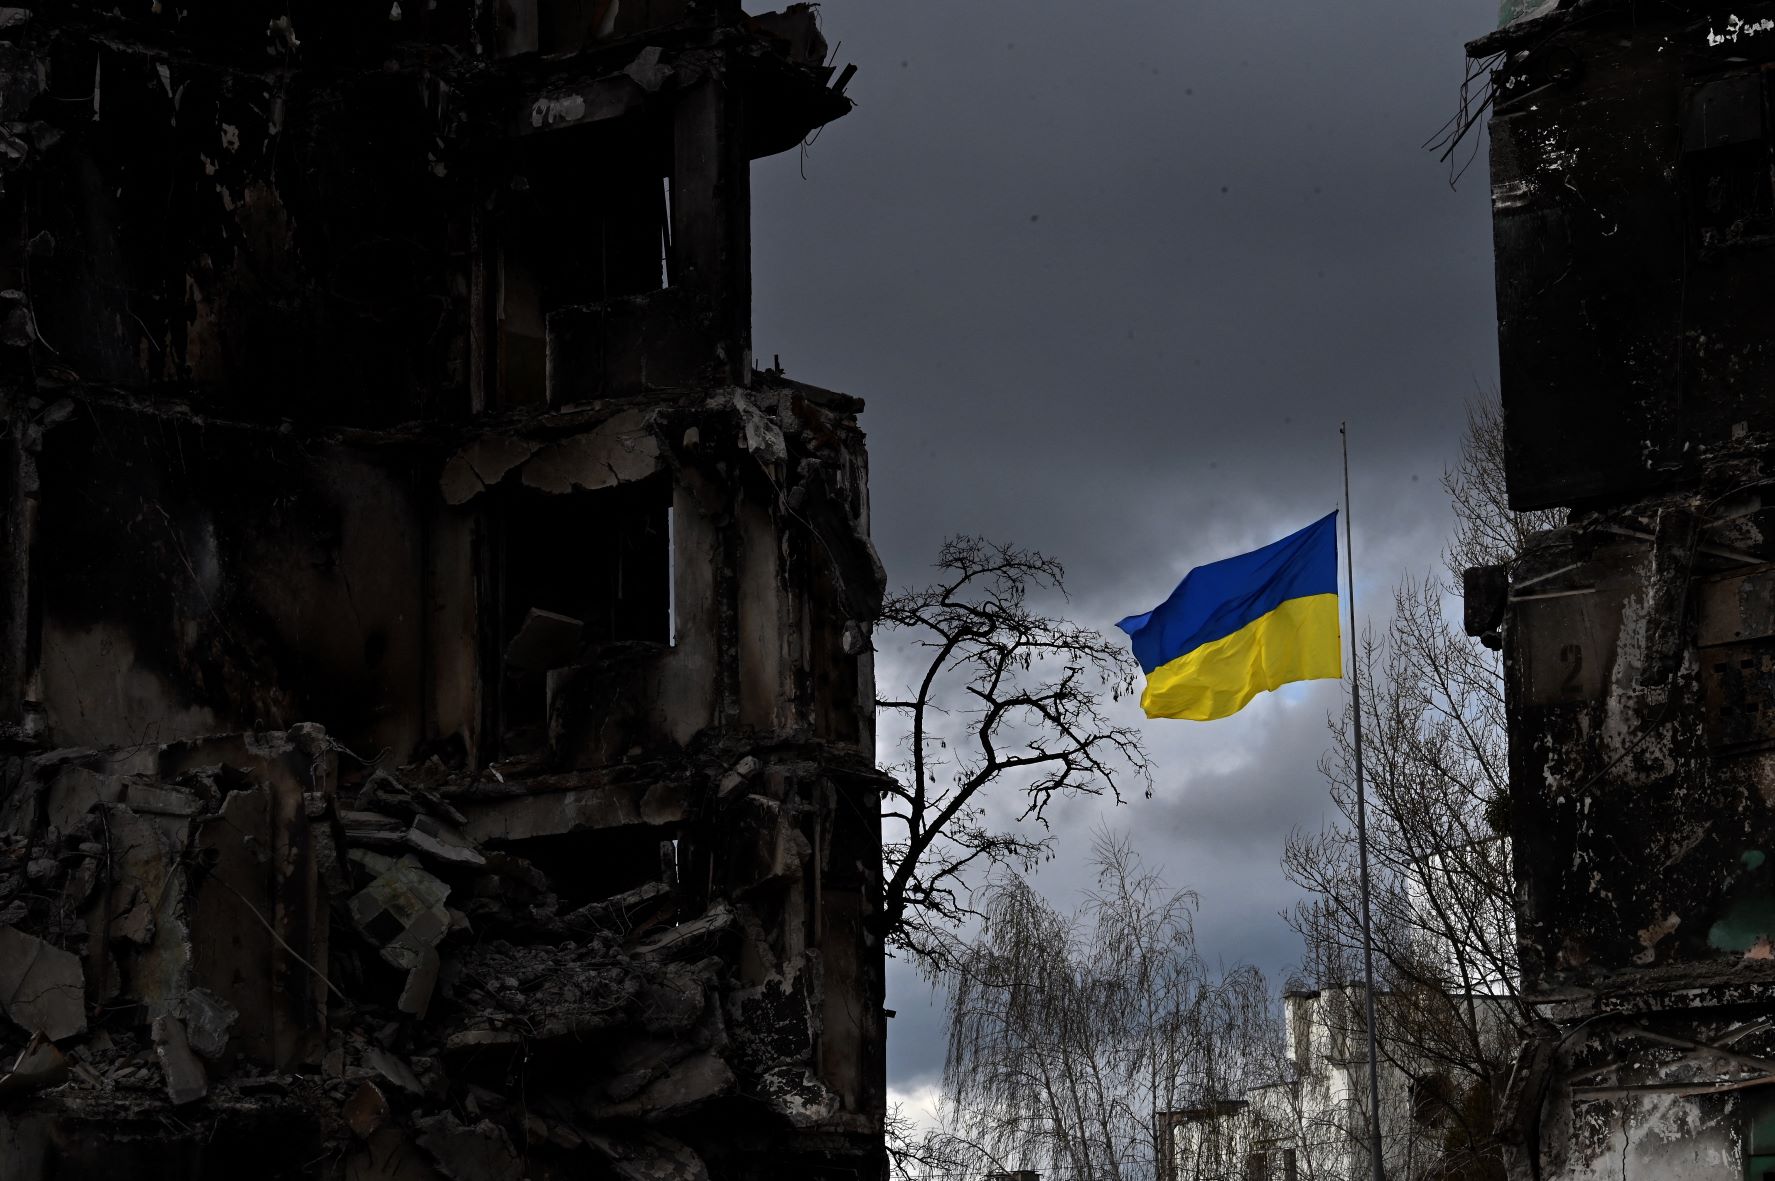 Bendera ukraine